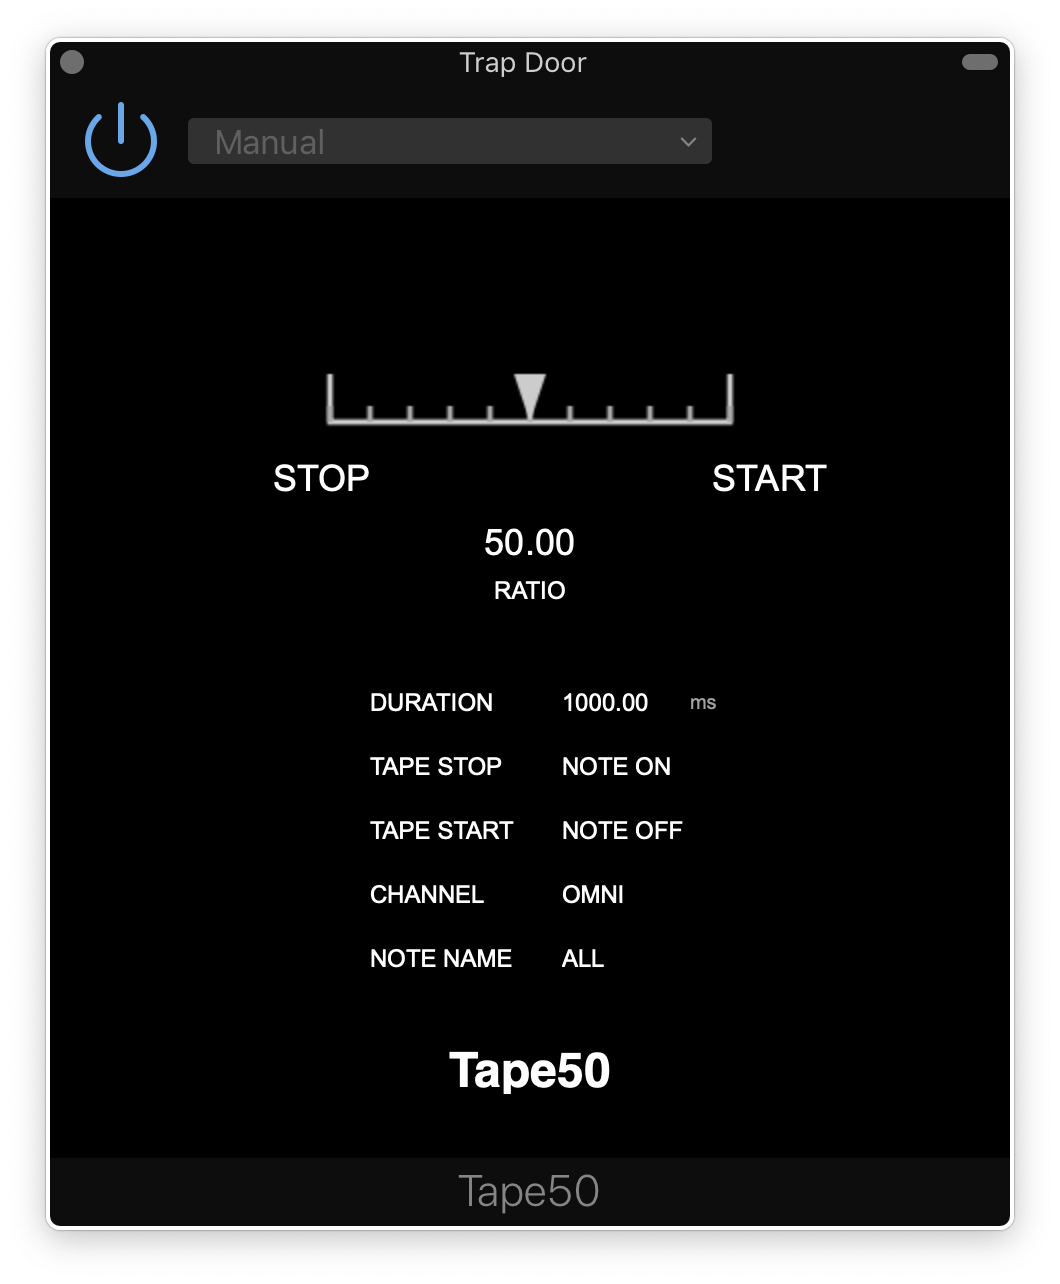 Snapshot of the Tape50